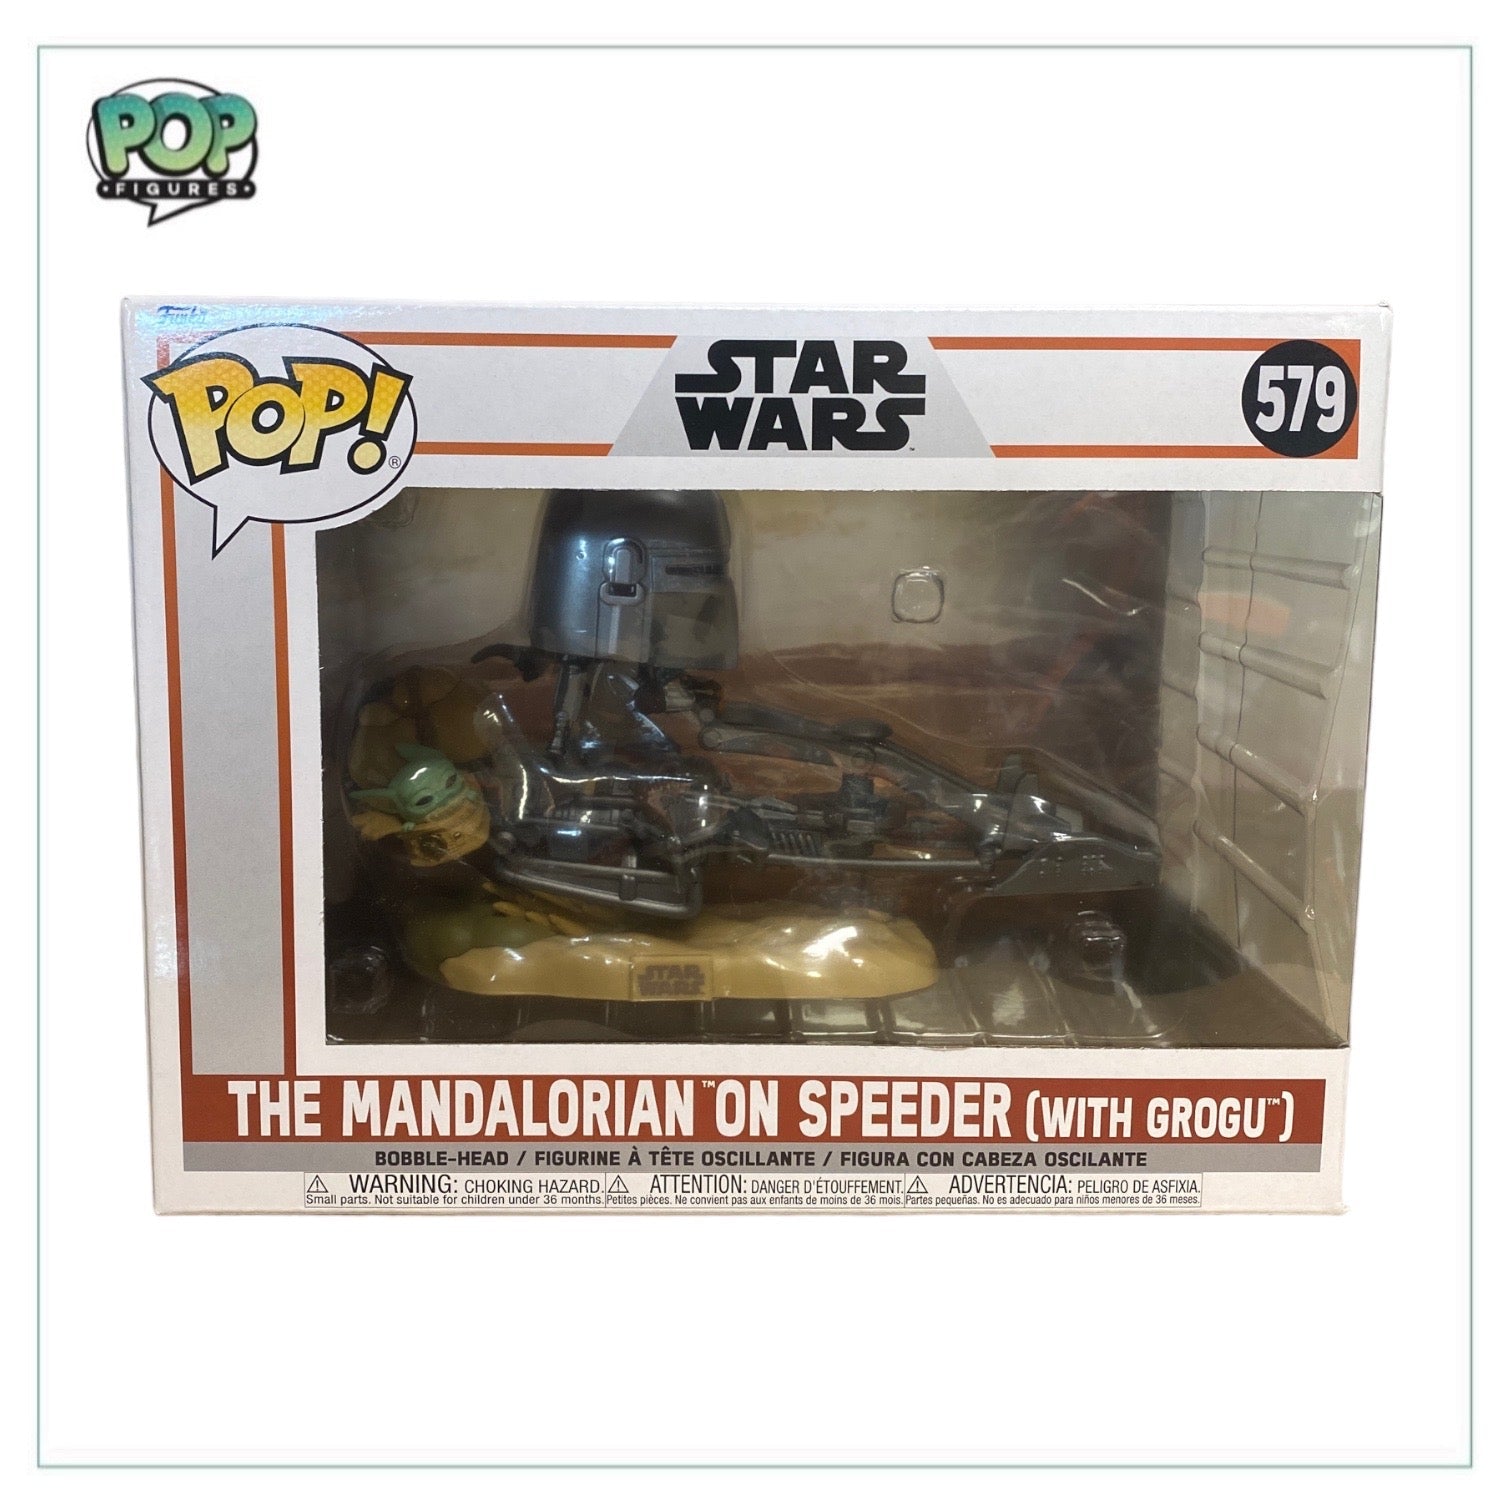 The Mandalorian on Speeder with Grogu #579 Funko Pop! - Star Wars - Funko Shop Exclusive (No Sticker) - Condition 8/10